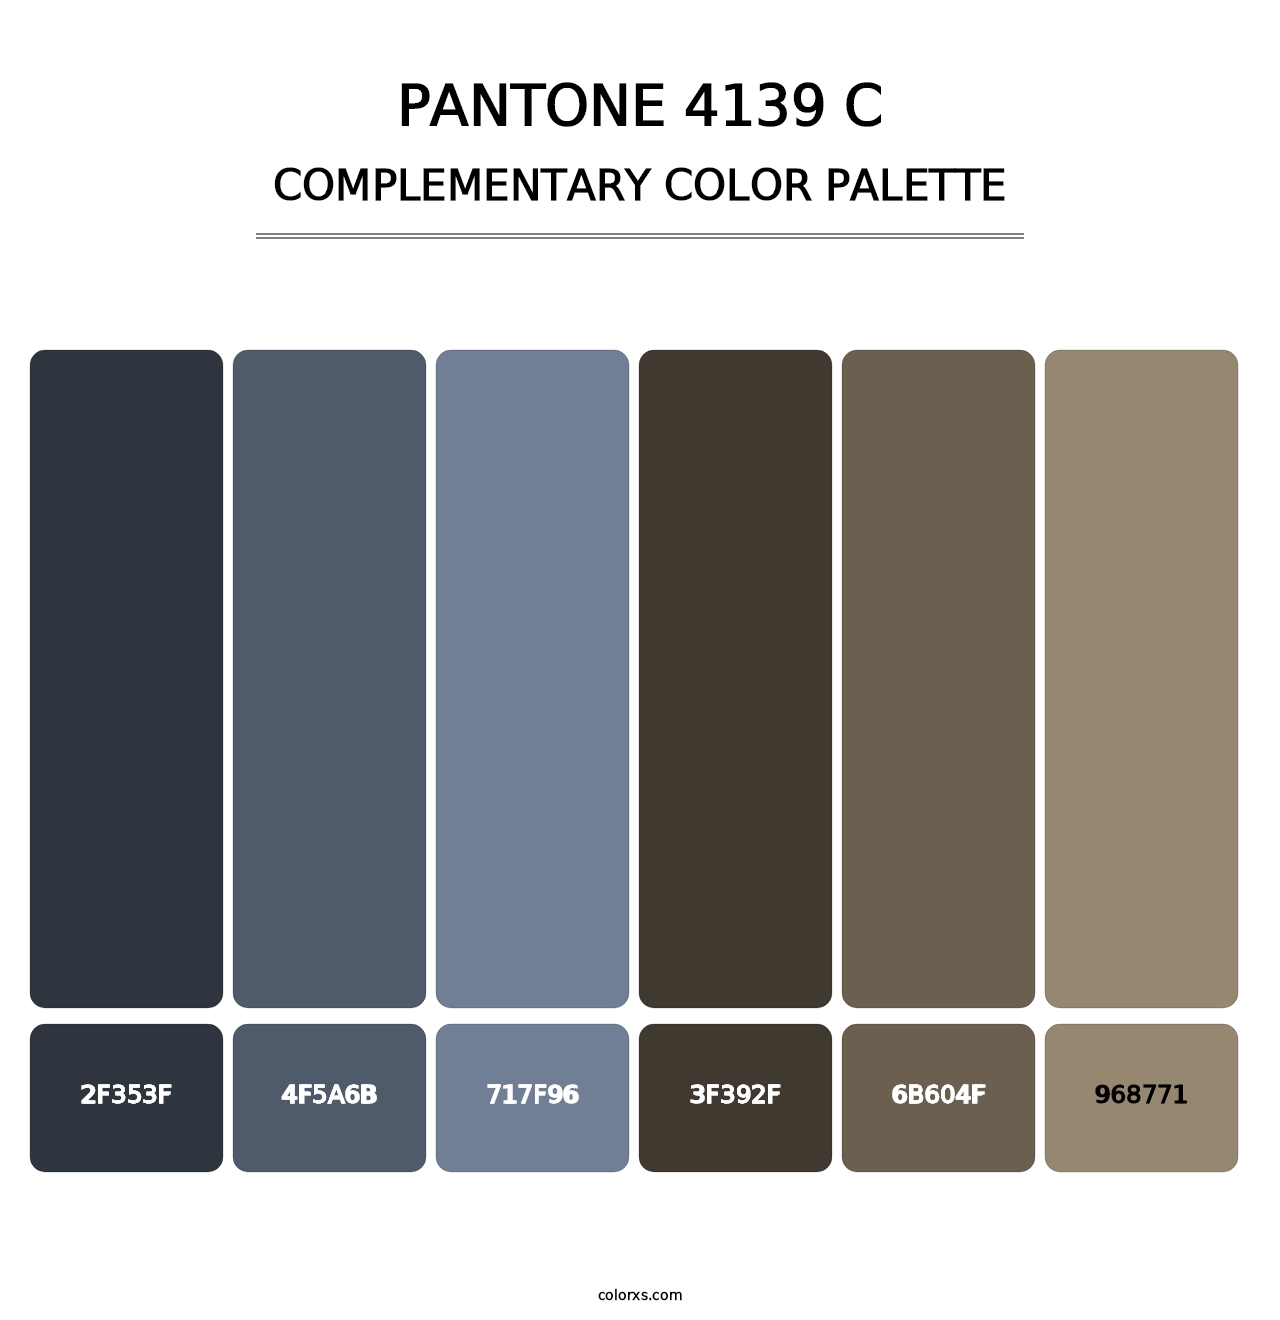 PANTONE 4139 C - Complementary Color Palette